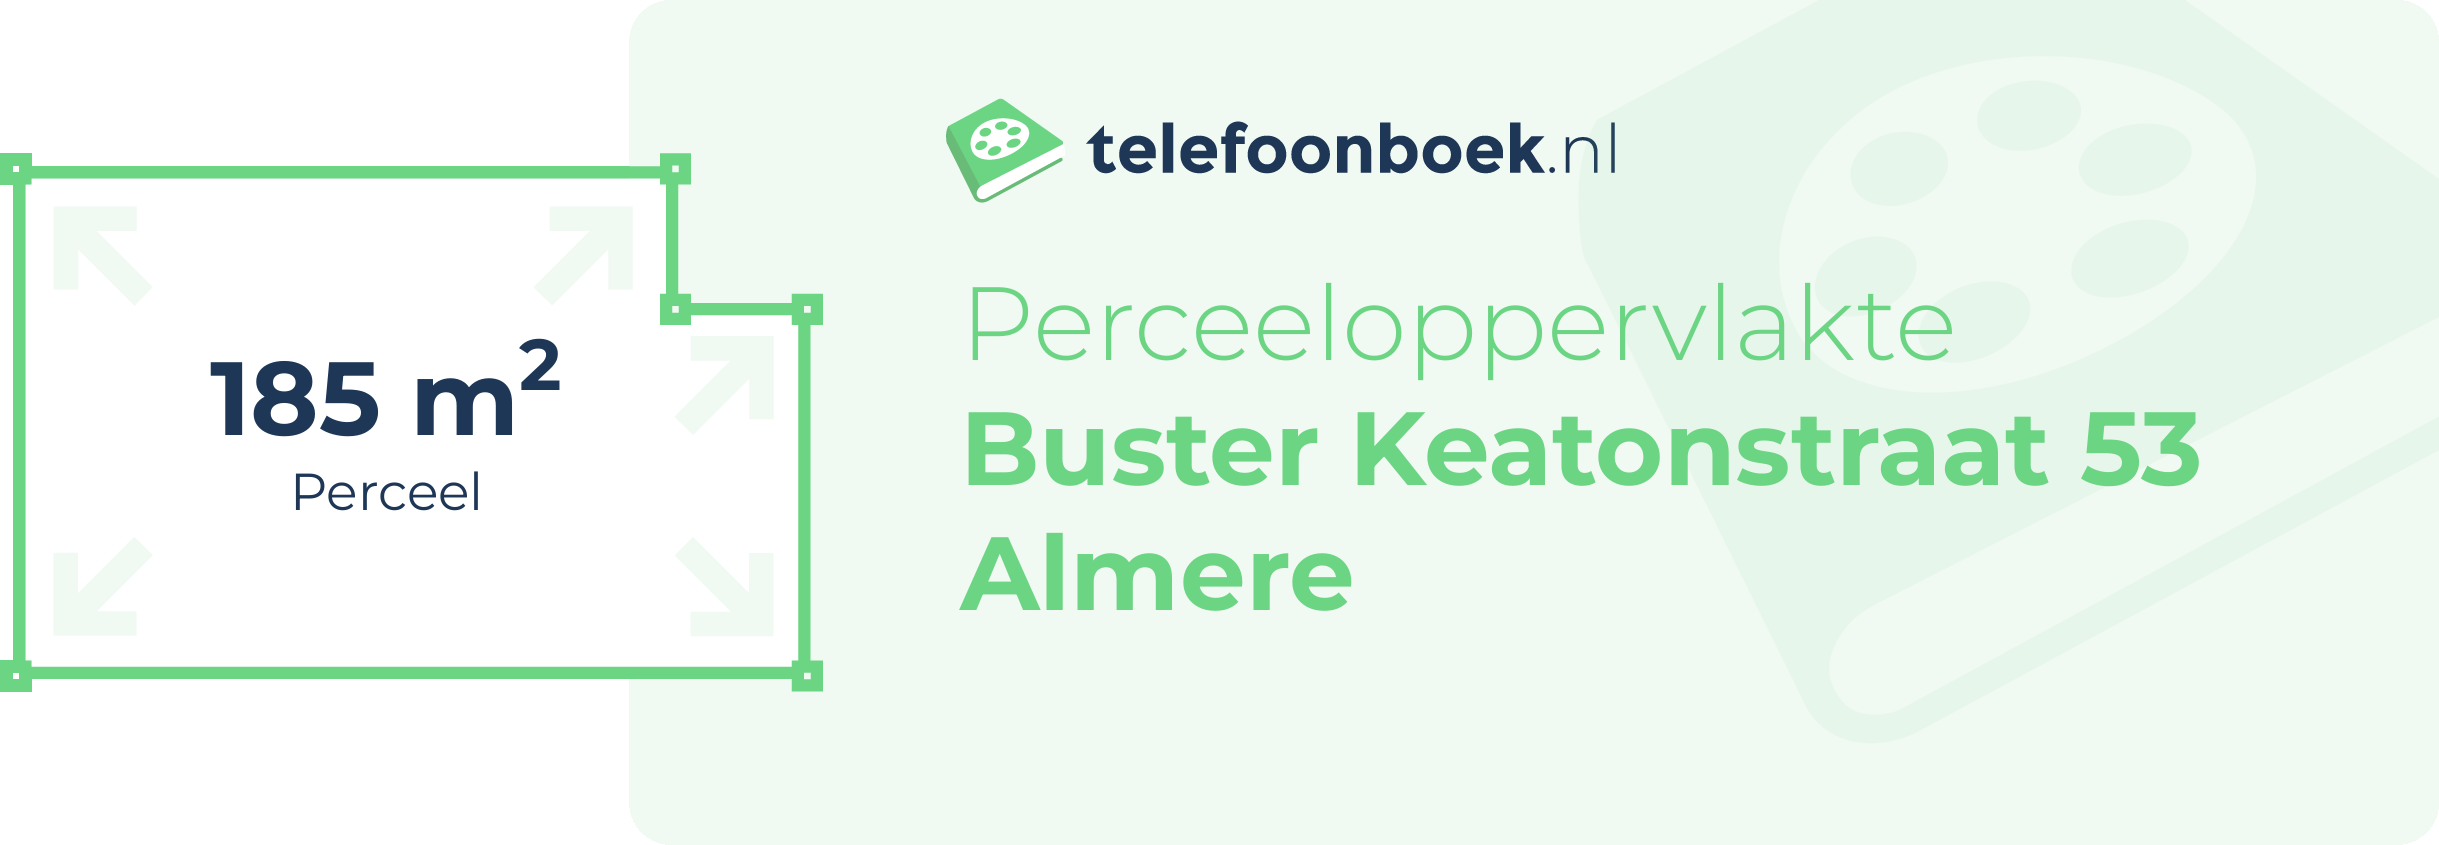 Perceeloppervlakte Buster Keatonstraat 53 Almere